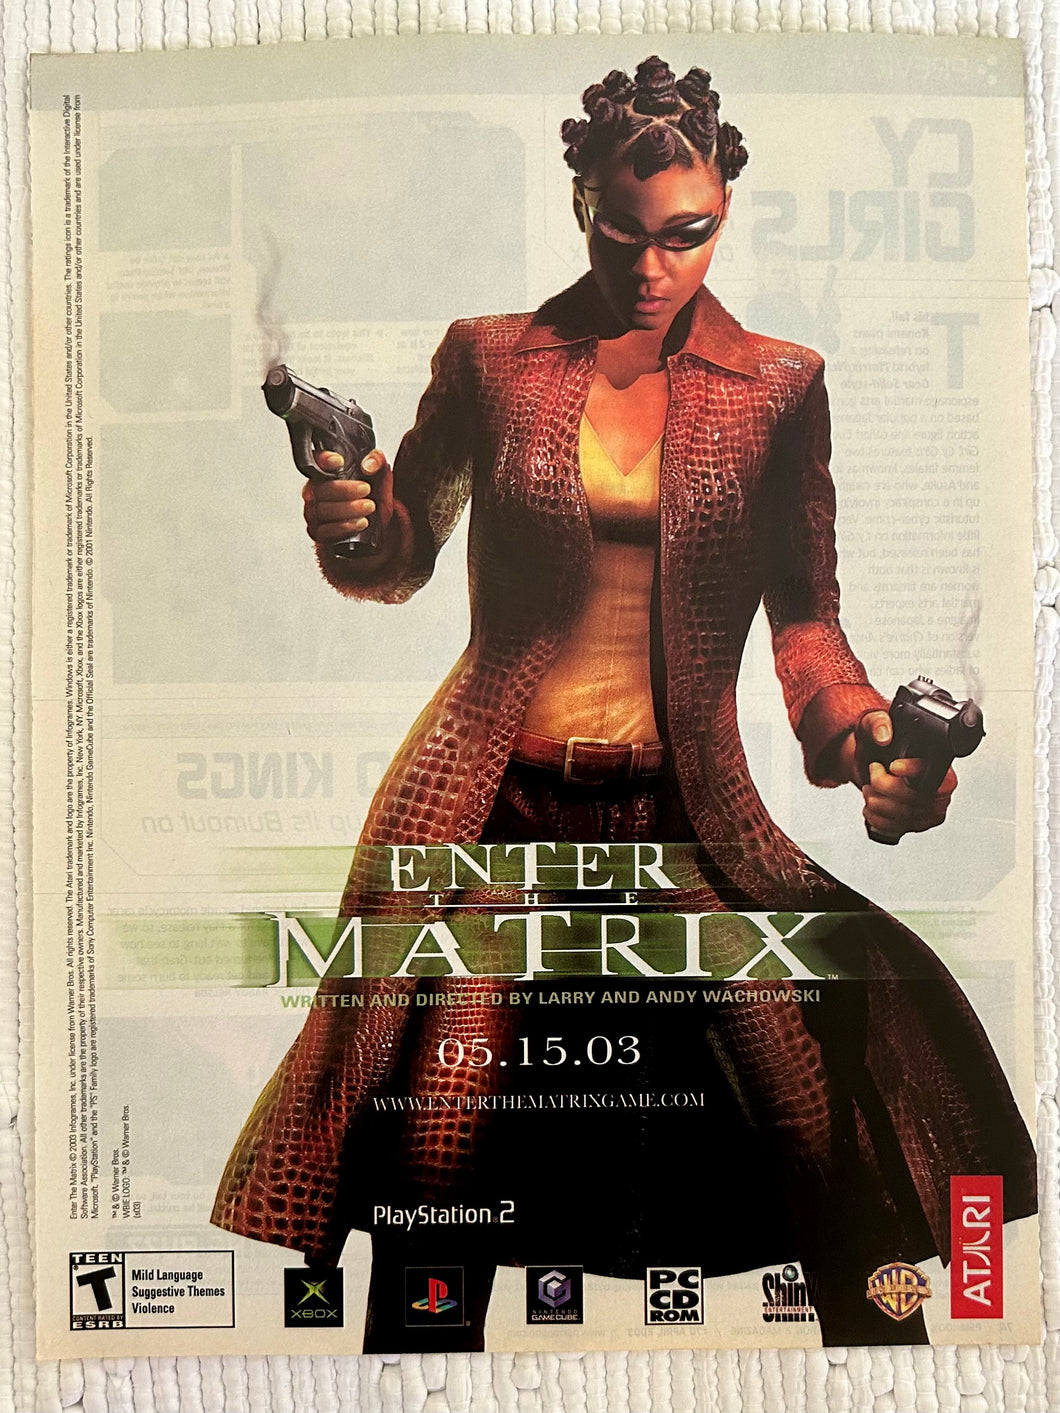 Enter the Matrix - PS2 NGC Xbox PC - Original Vintage Advertisement - Print Ads - Laminated A4 Poster